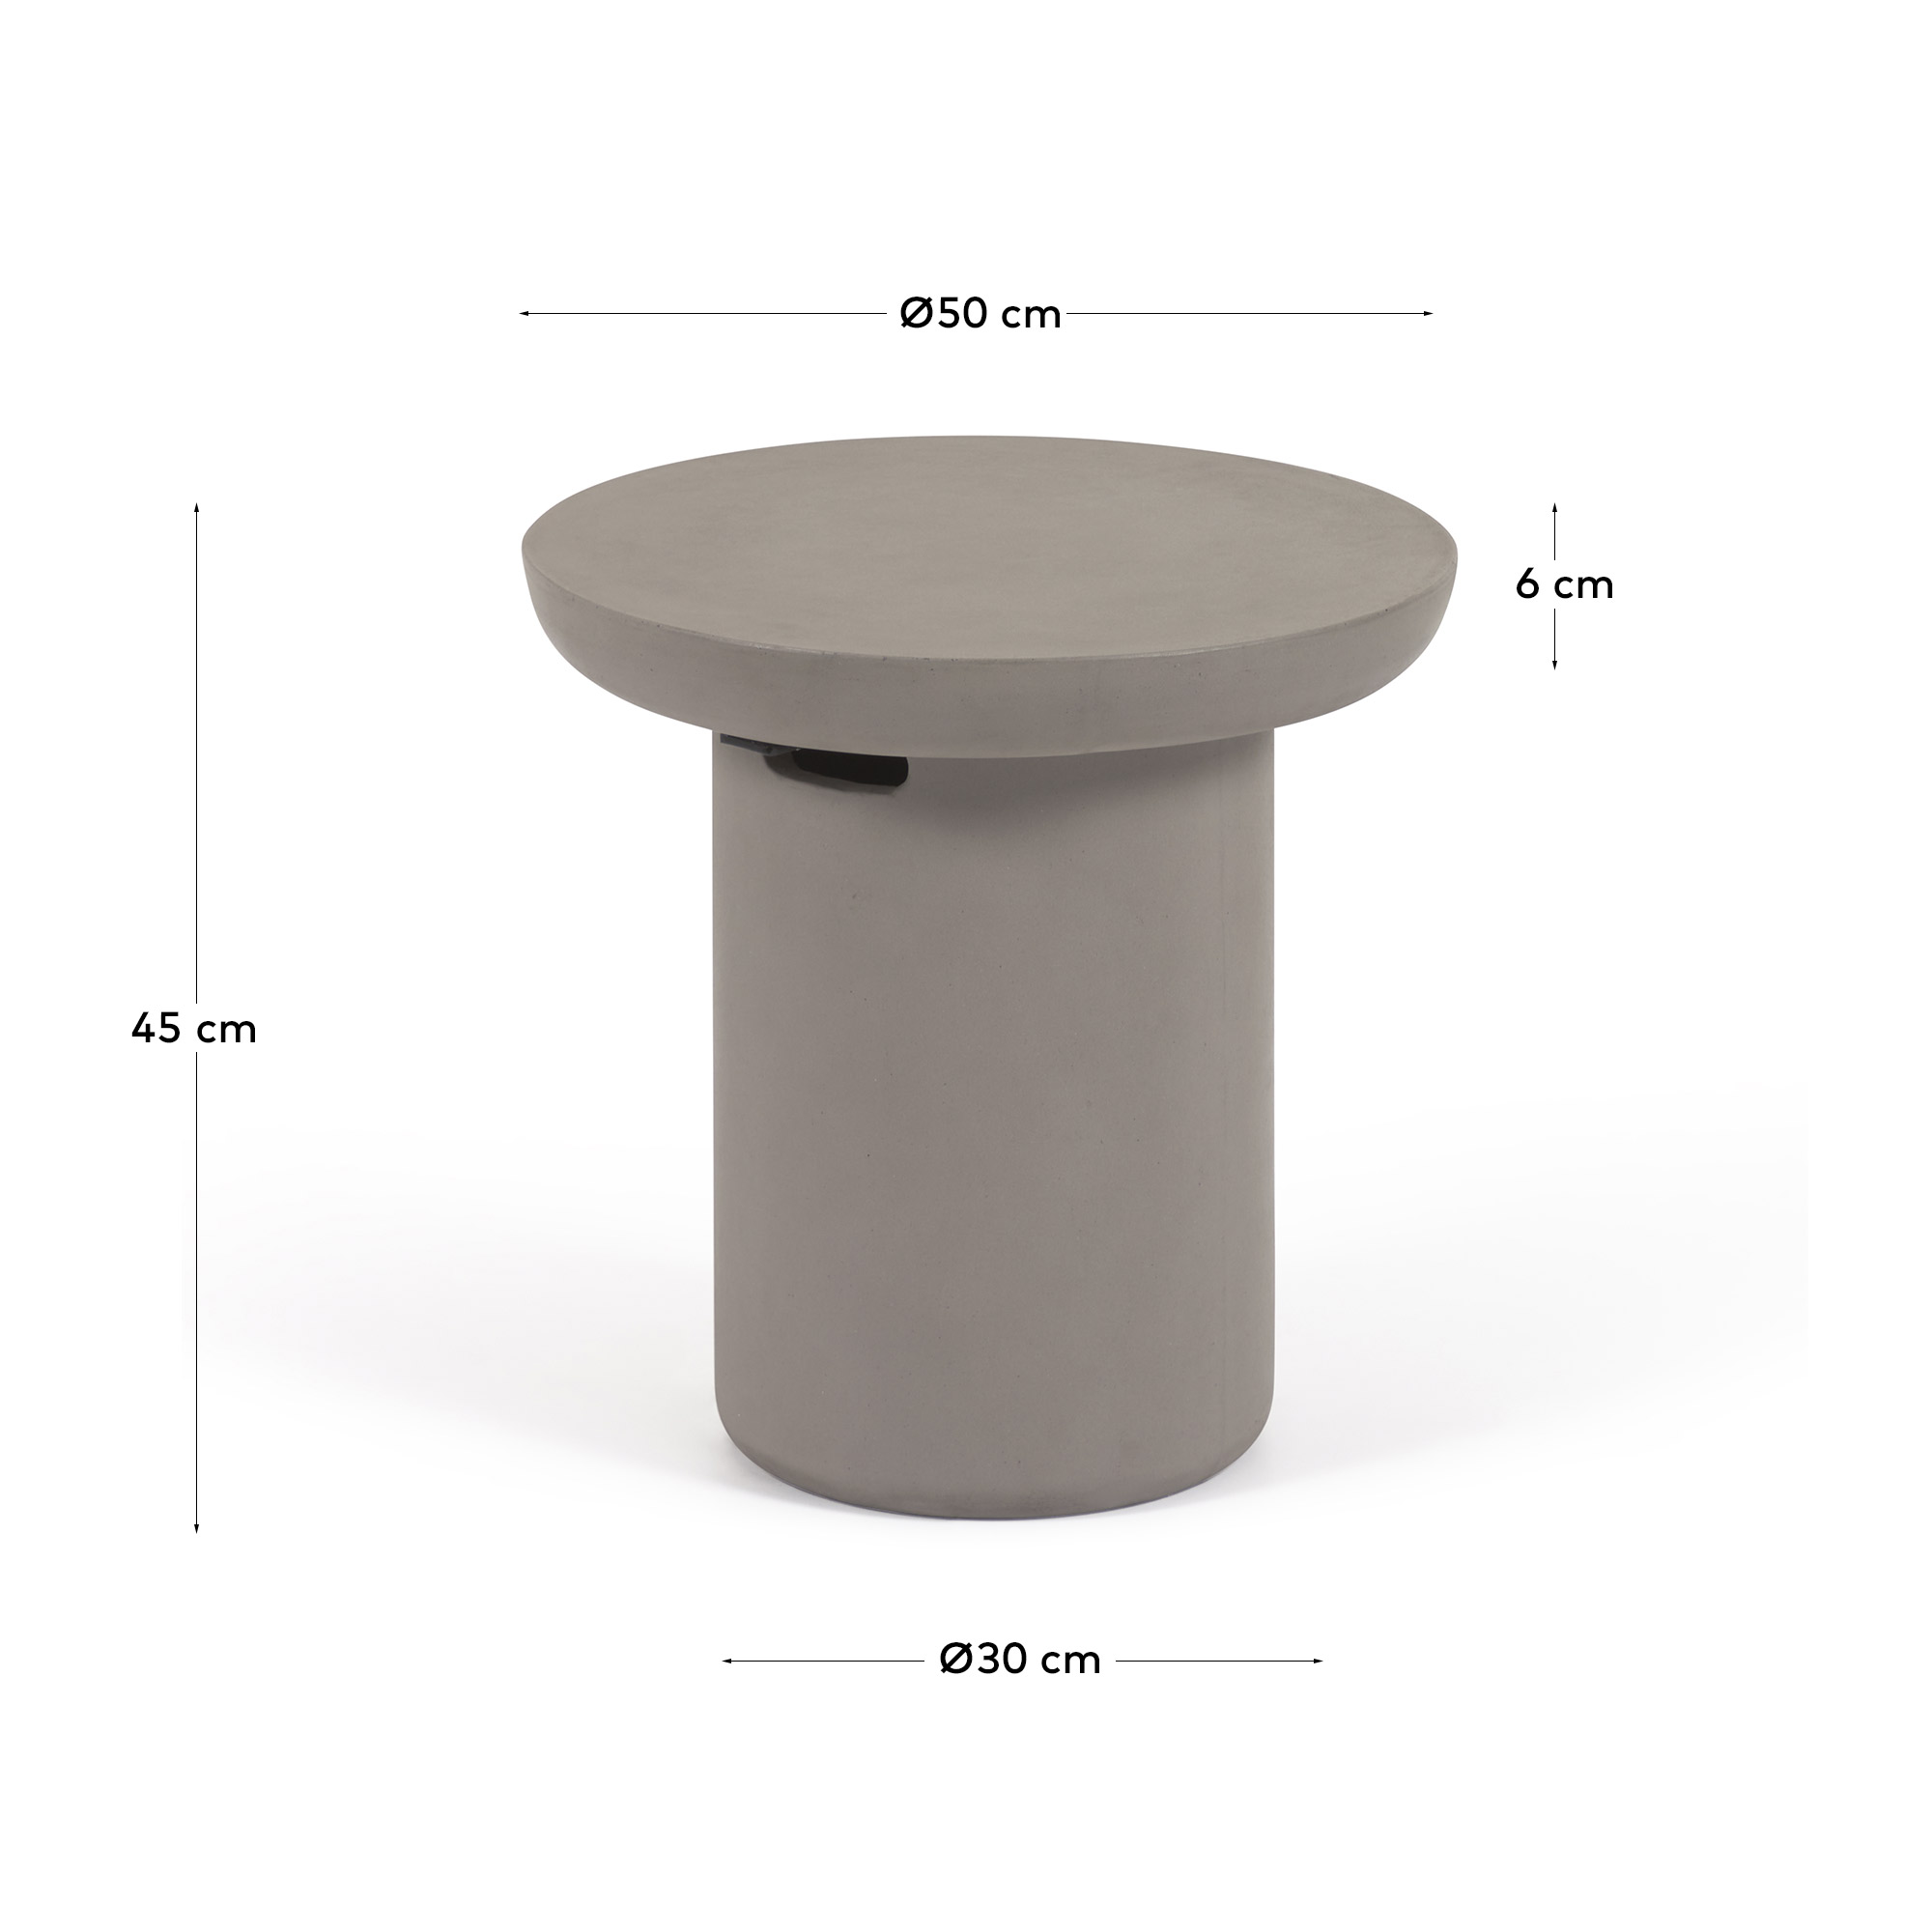 Taimi concrete round outdoor side table Ø 50 cm - sizes